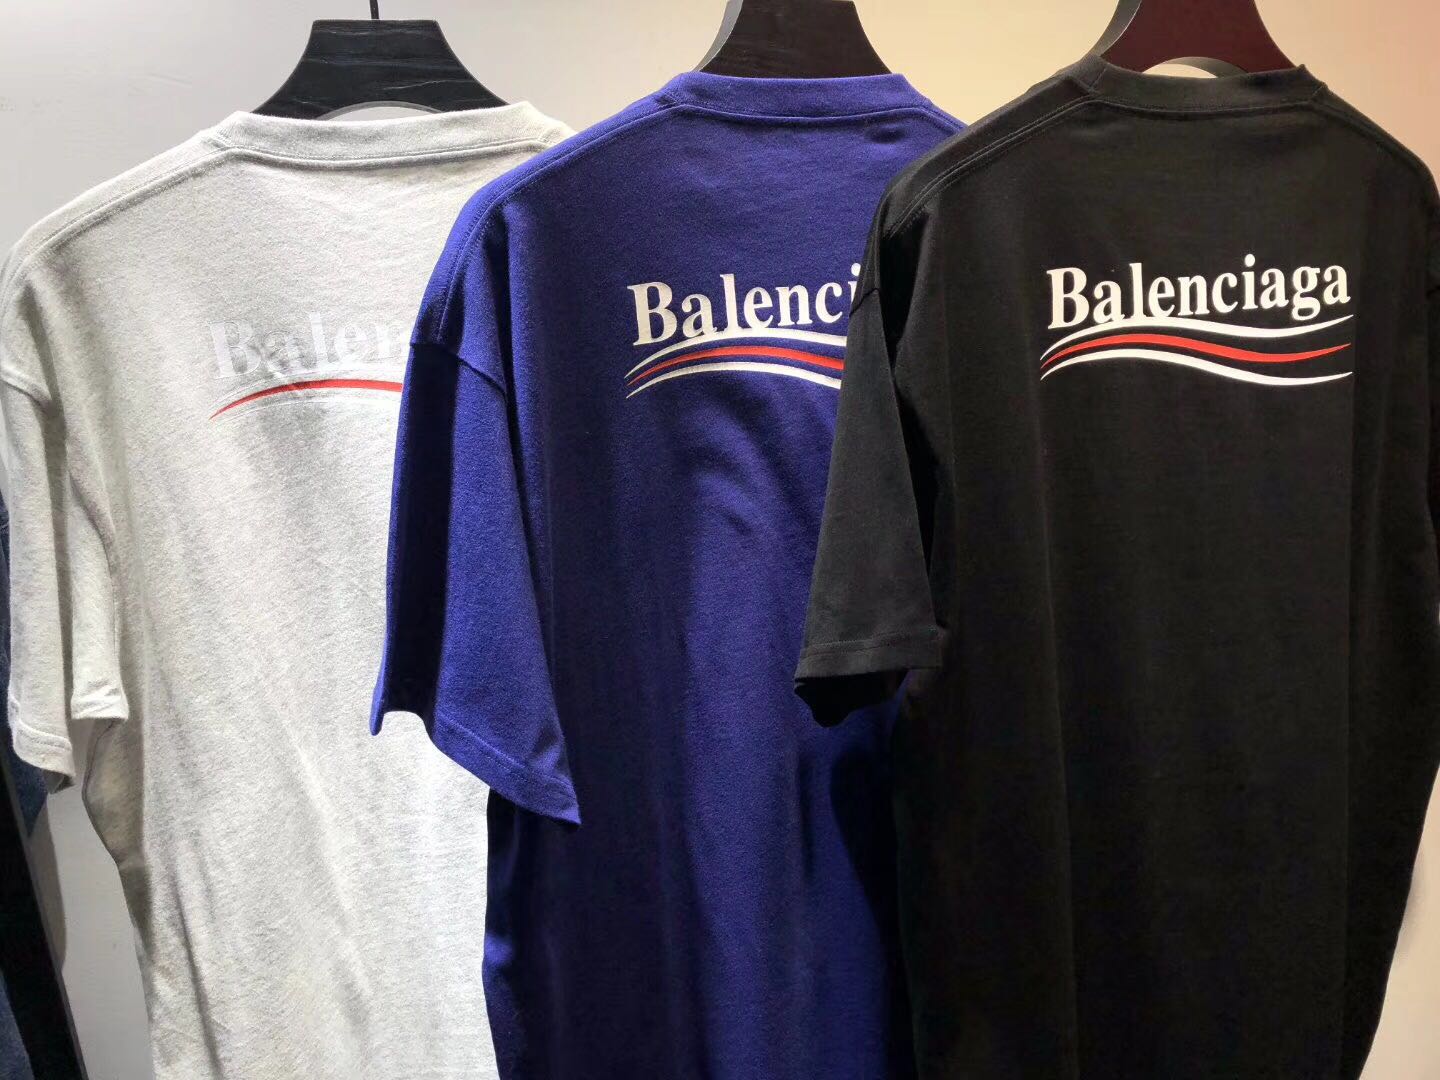 balenciaga shirt with shirt attached